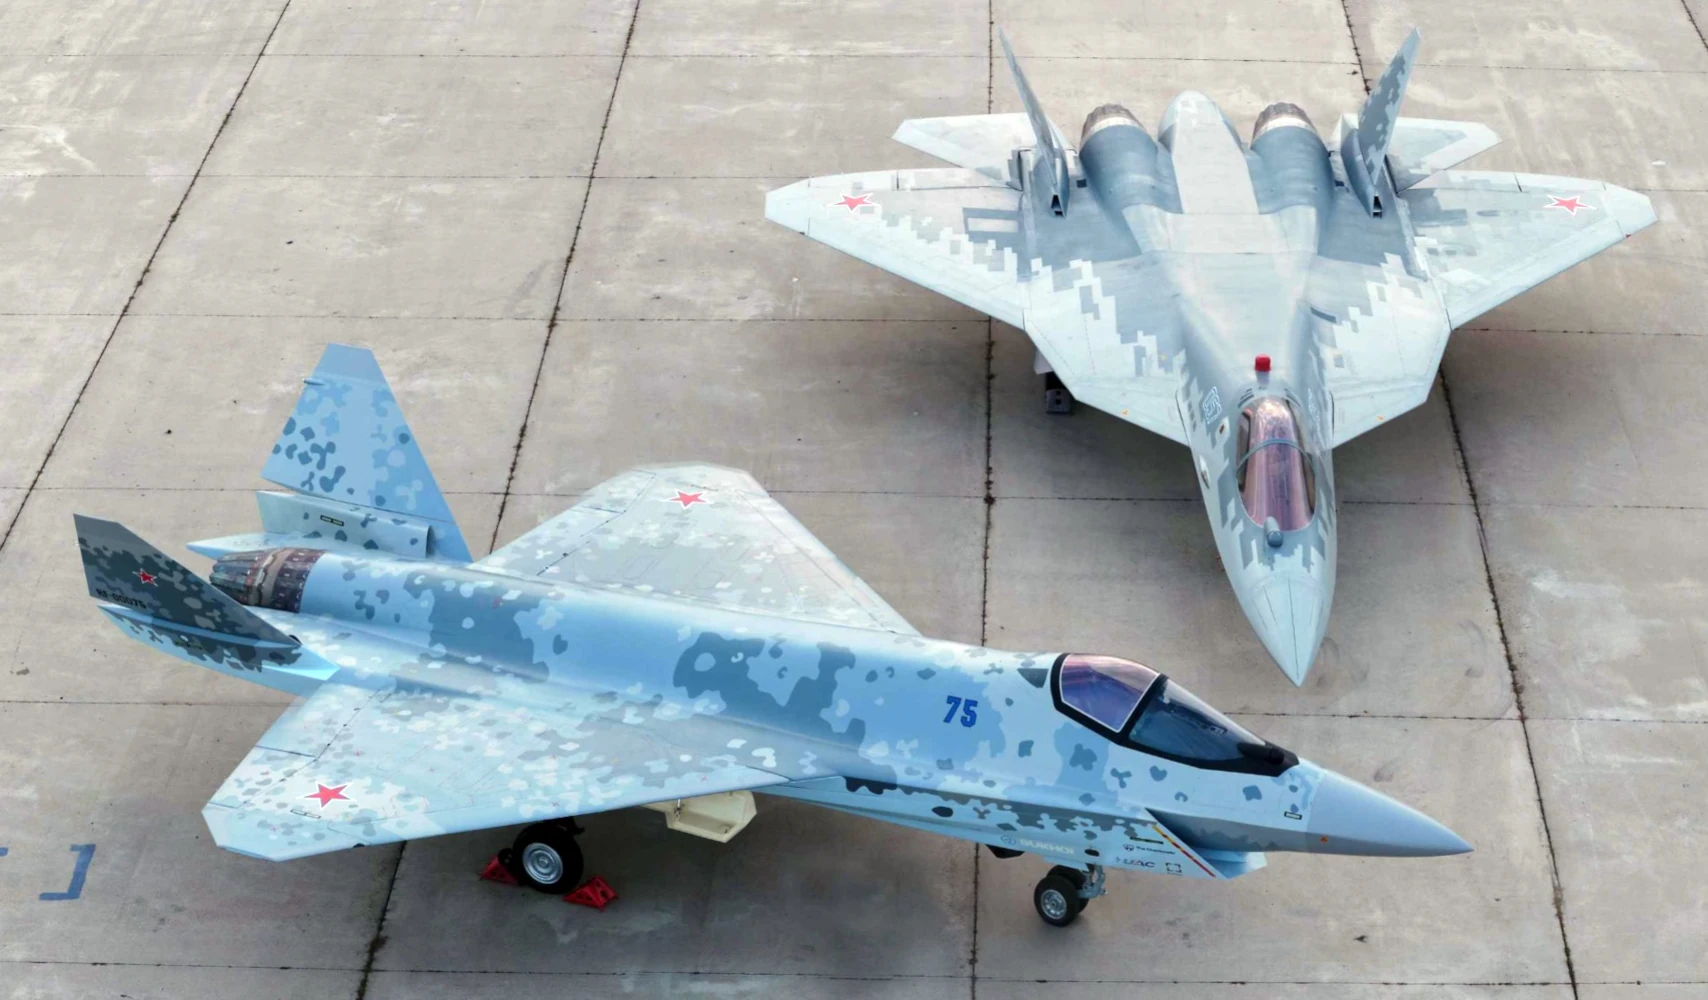 Su-75 was displayed at Dubai Air Show 2021